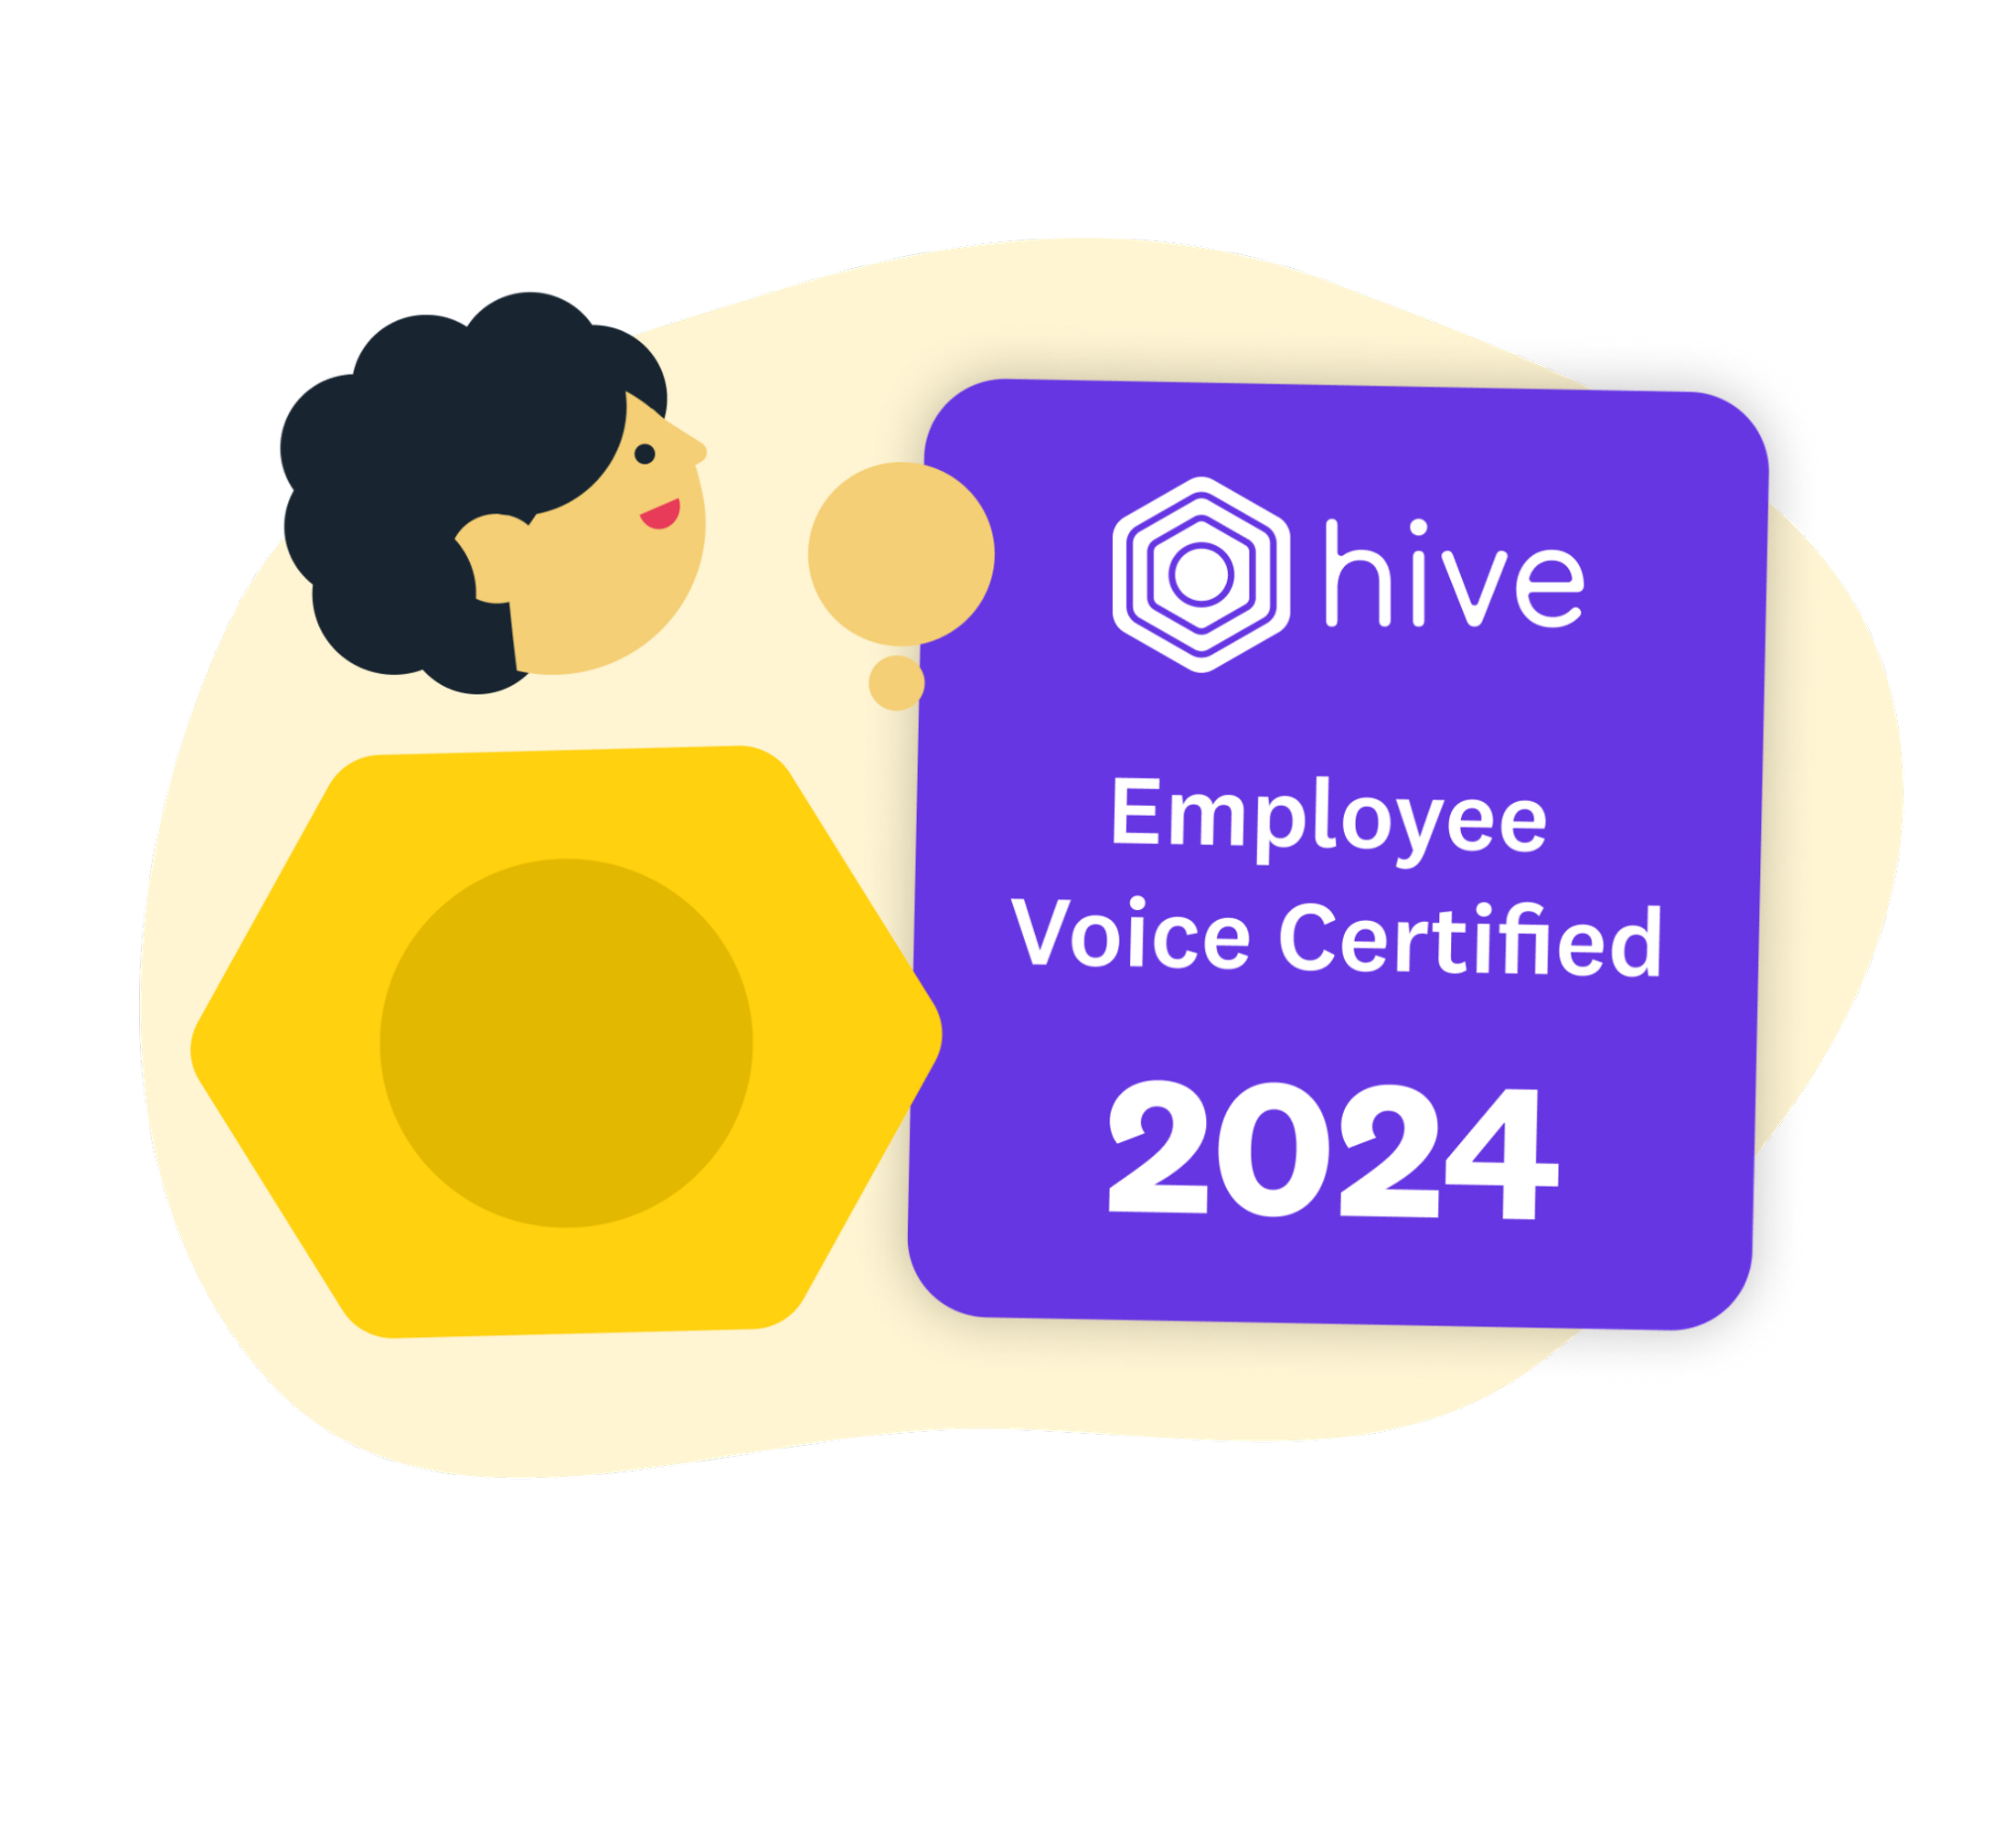 Hive Employee Voice Certified 2024 logo